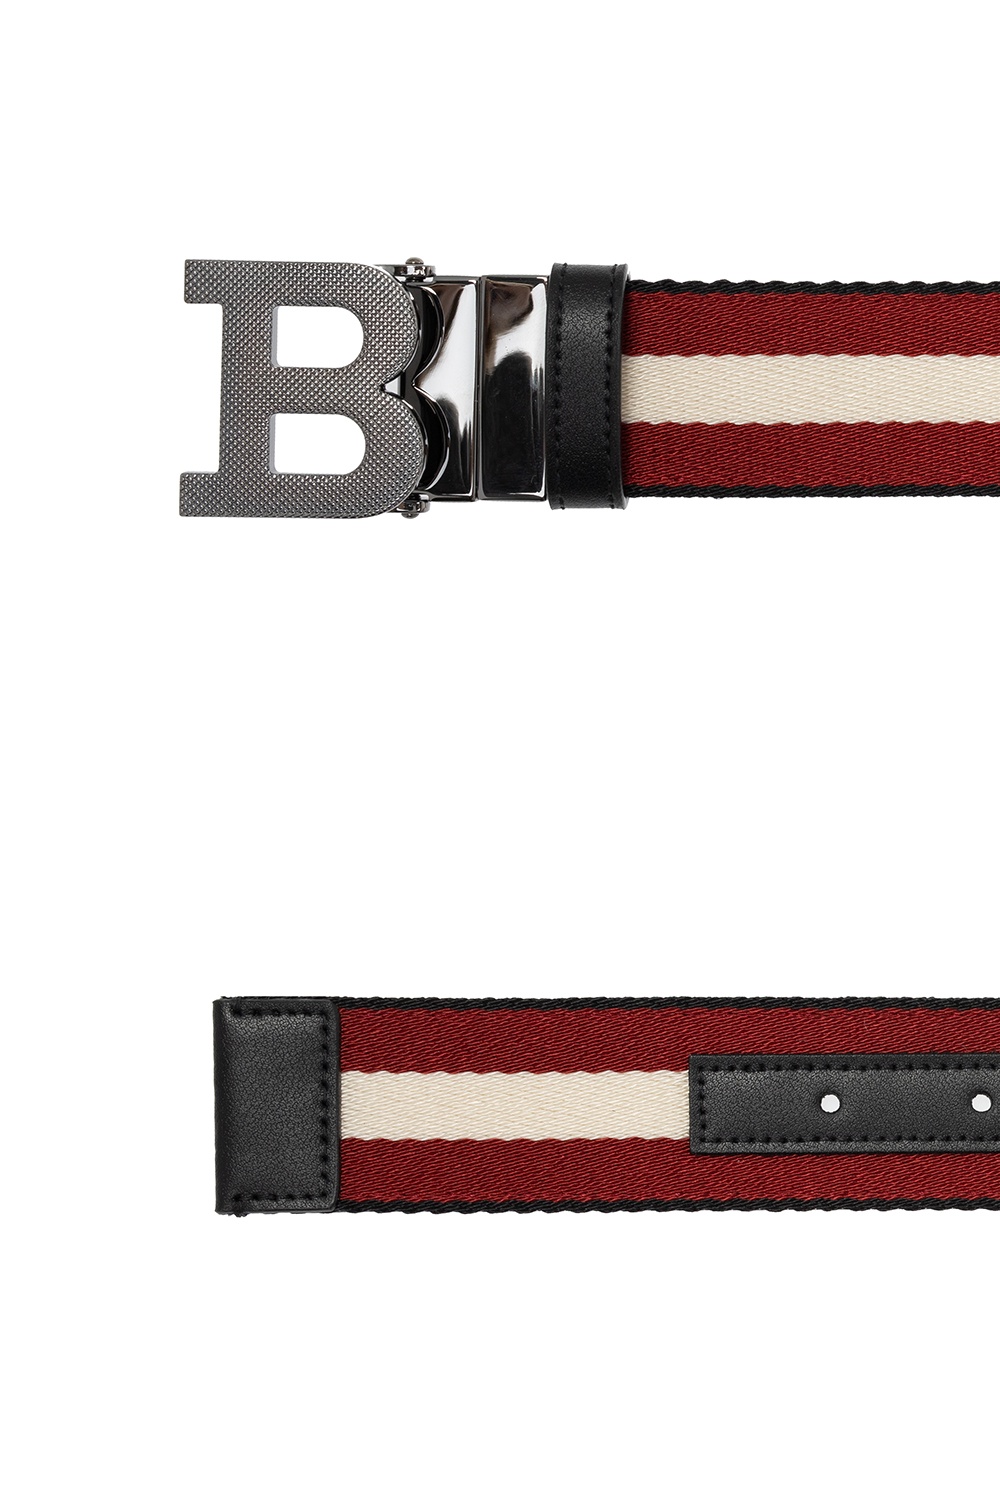 Bally 'B Buckle' leather belt | Men's Accessories | Vitkac